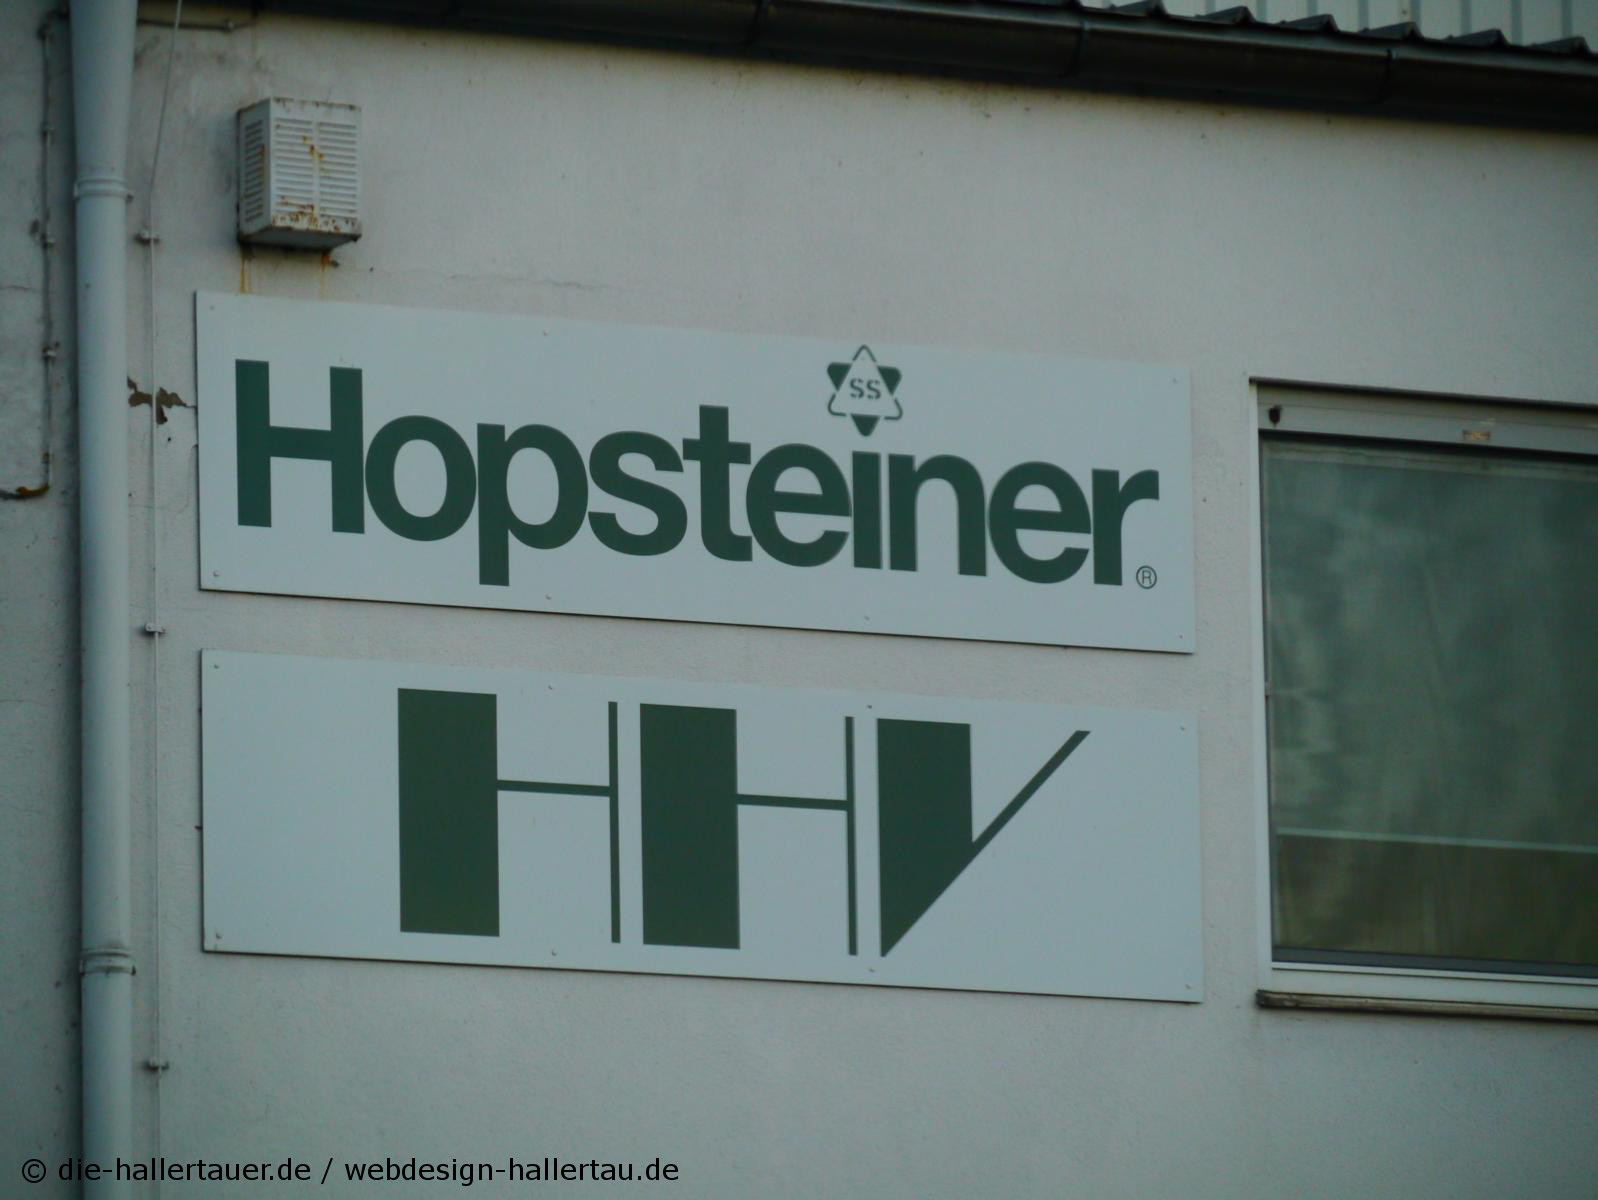 Hopsteiner Hallertau